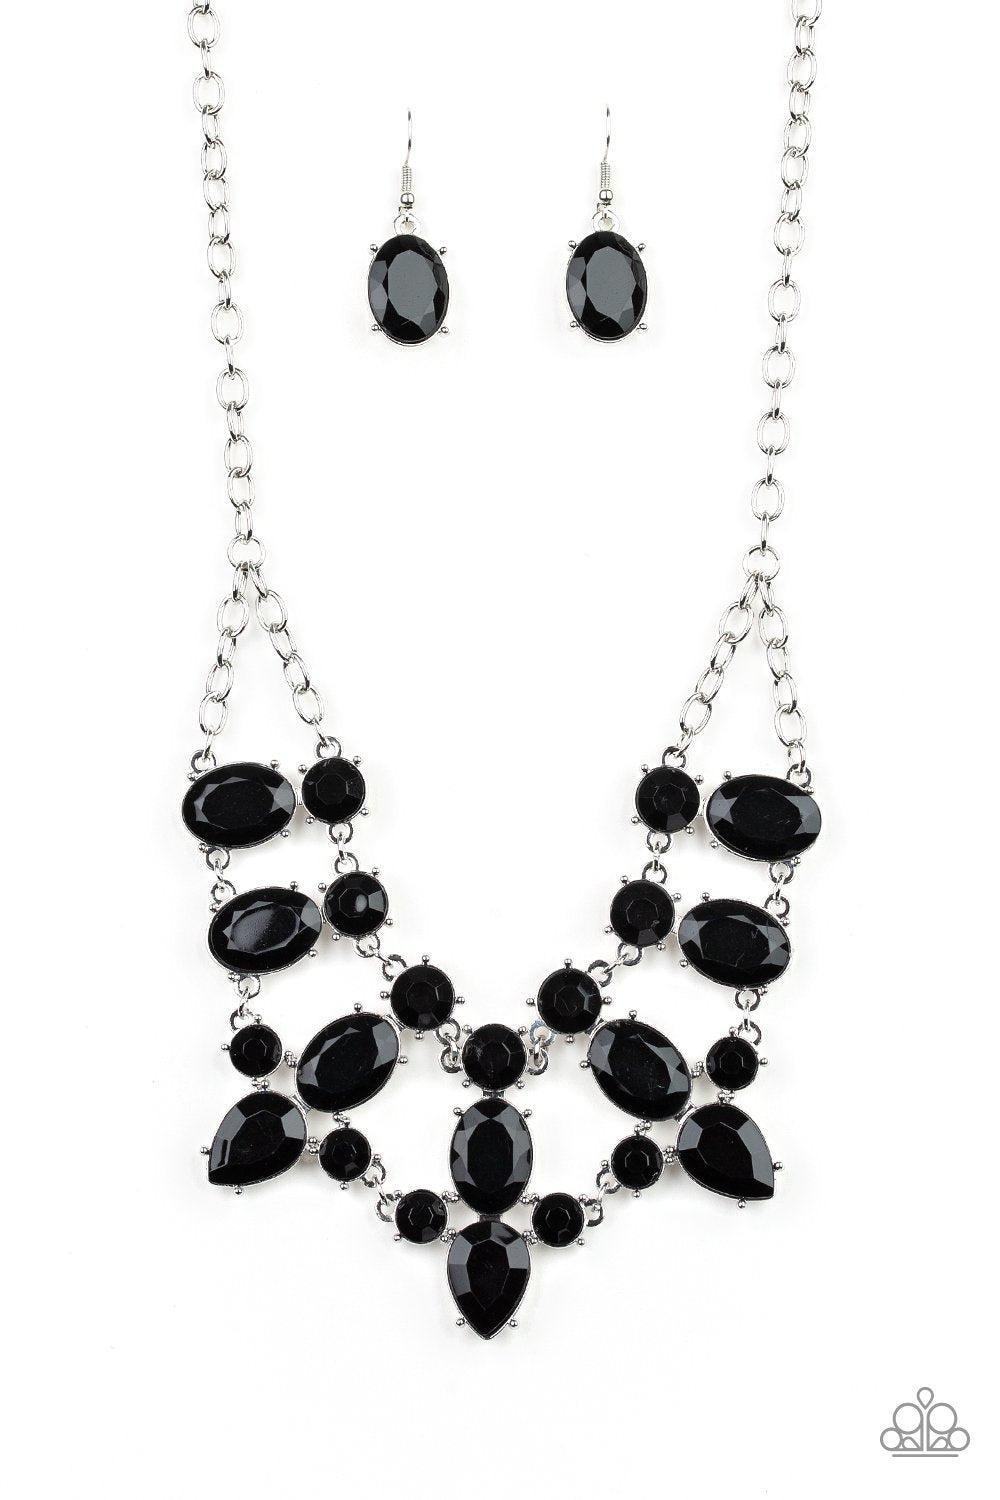 Goddess Glow Black Necklace - Paparazzi Accessories - lightbox -CarasShop.com - $5 Jewelry by Cara Jewels